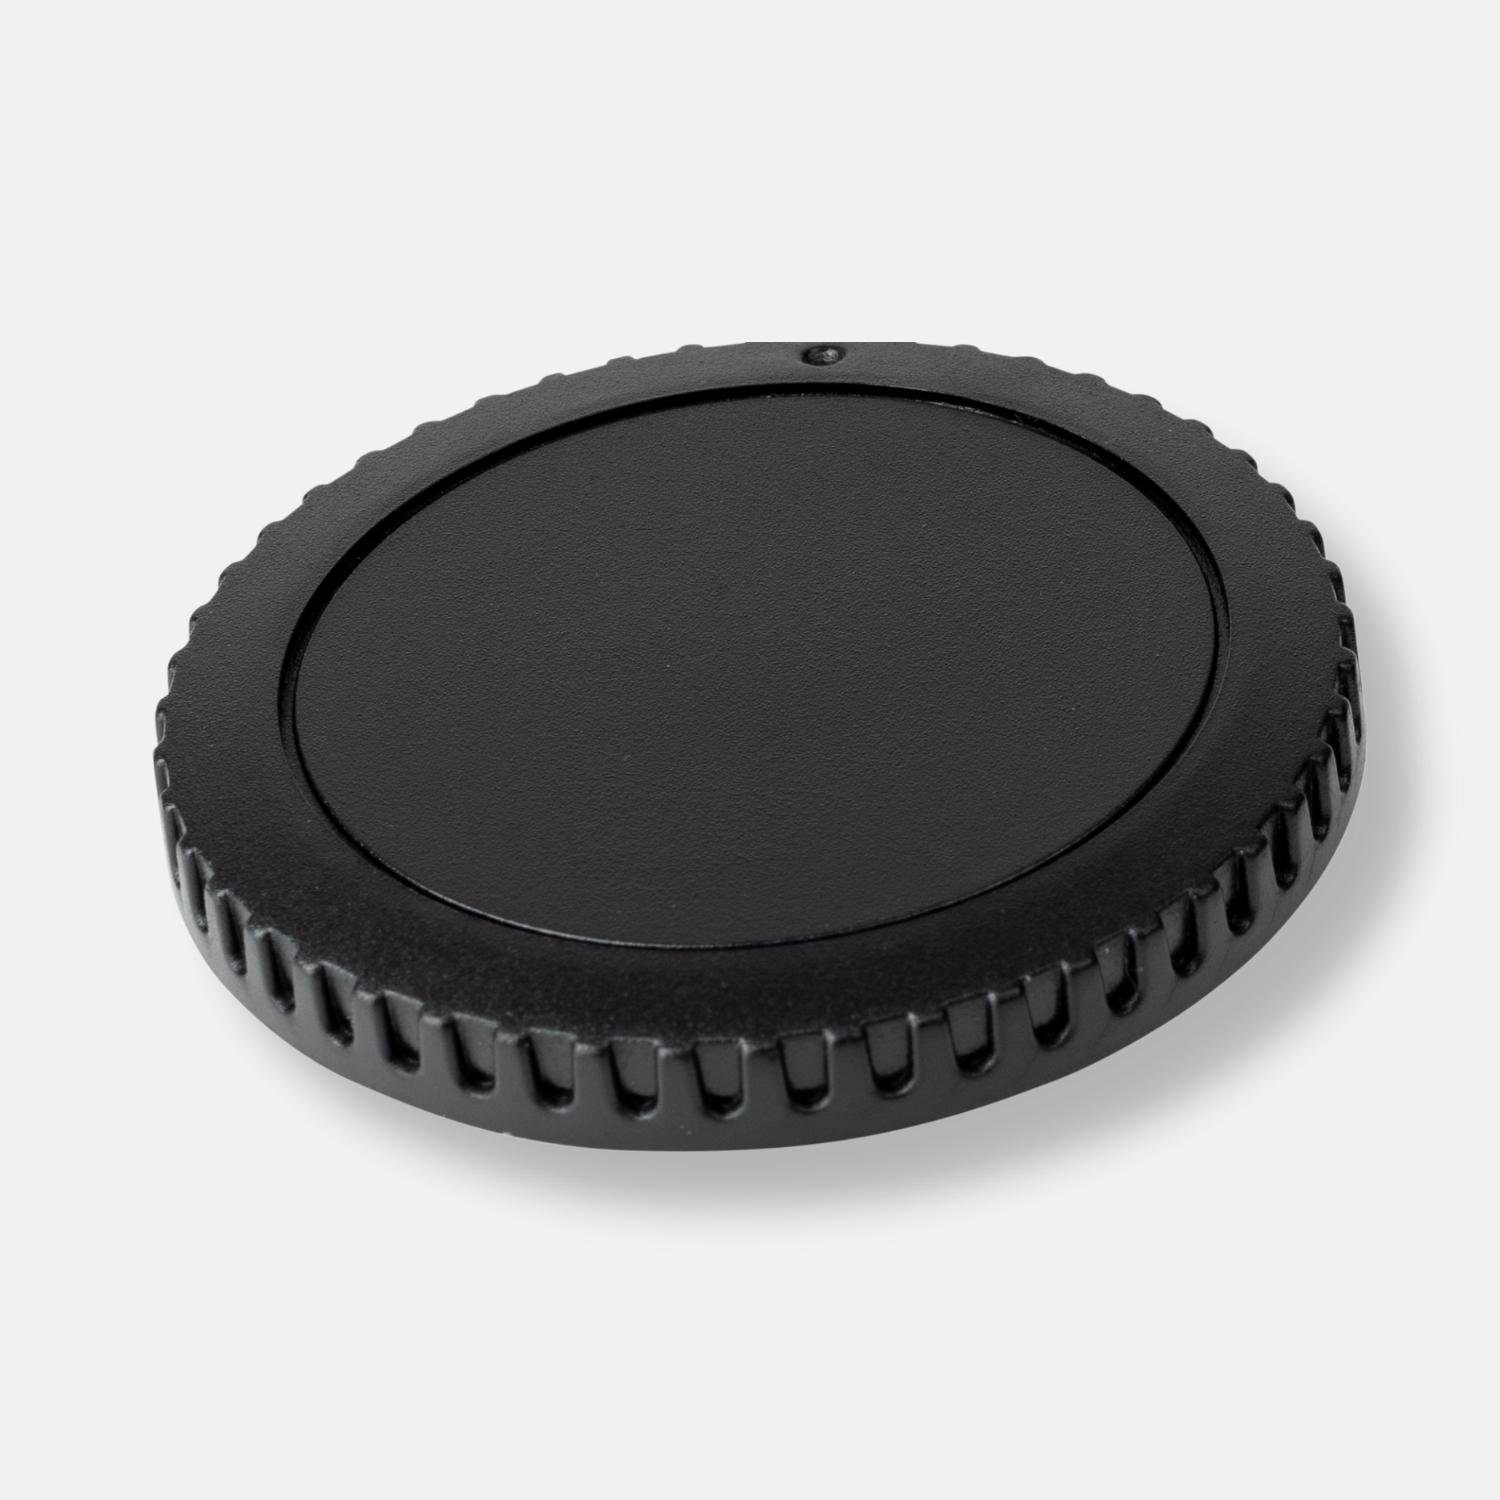 Lens-Aid Gehäusedeckel für Canon EF-Bajonett, Body Cap, DSLR, Systemkamera